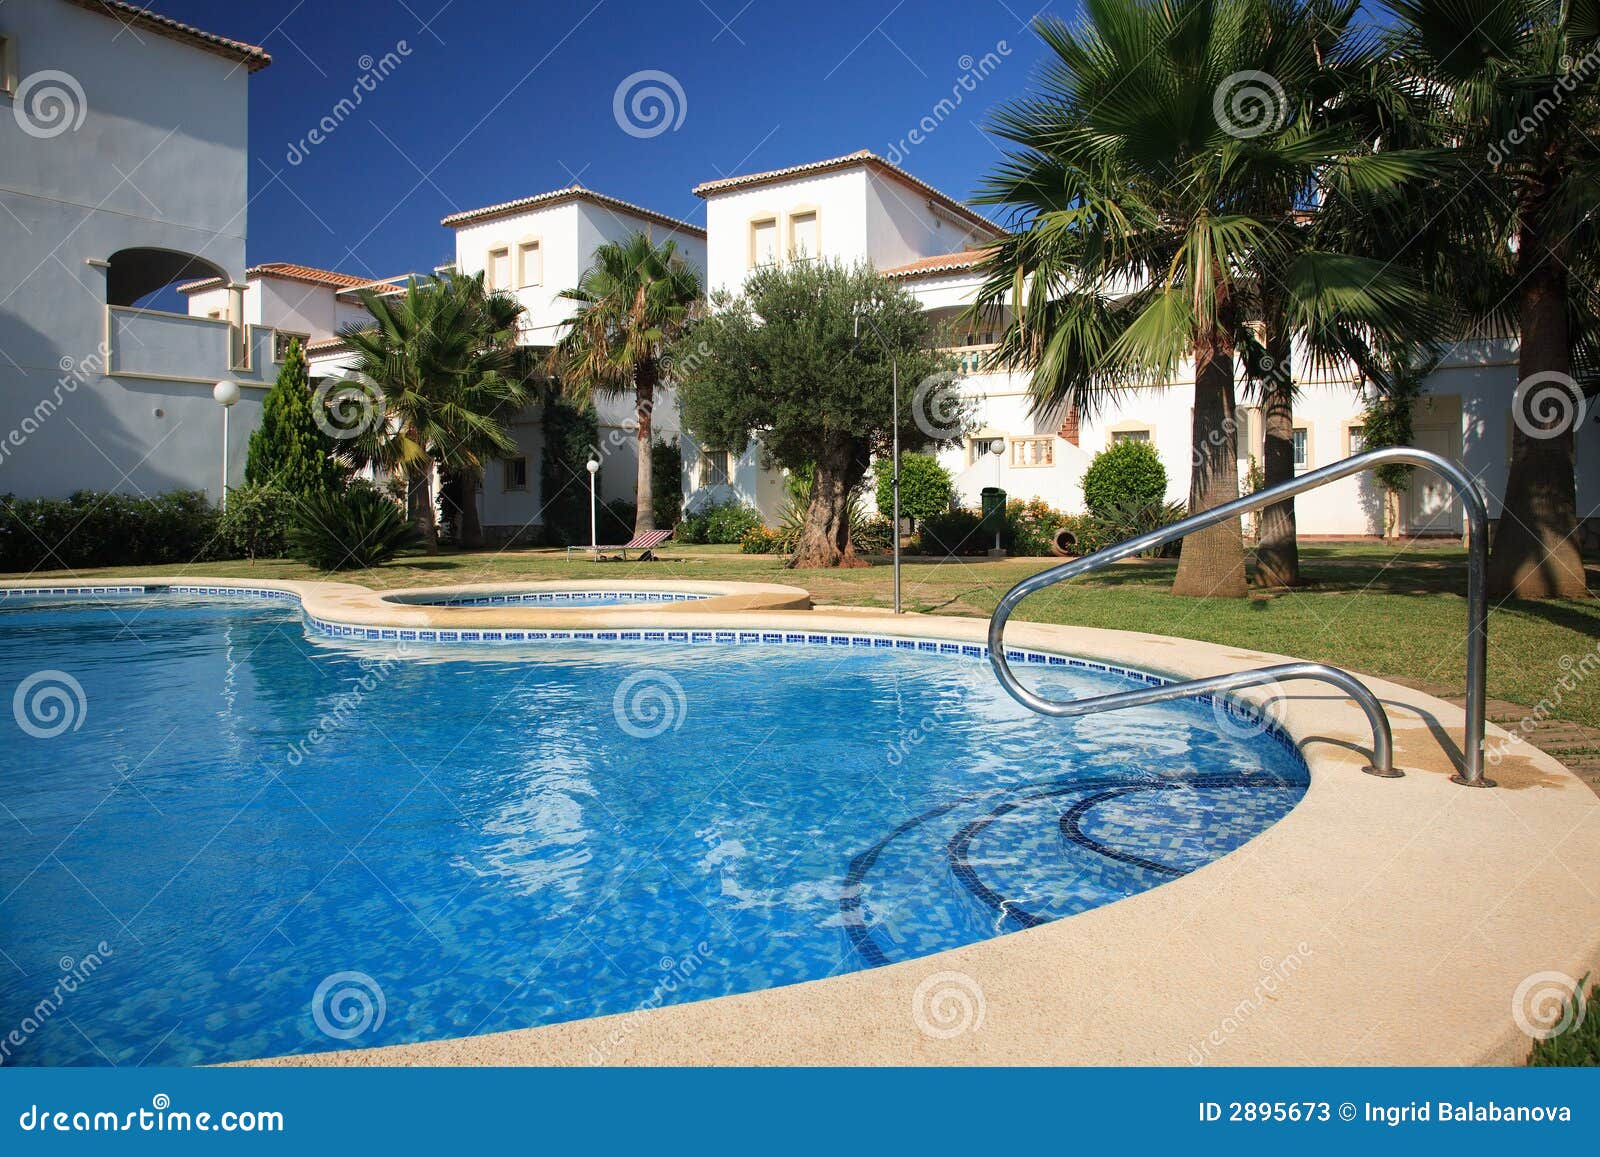 spanish villas